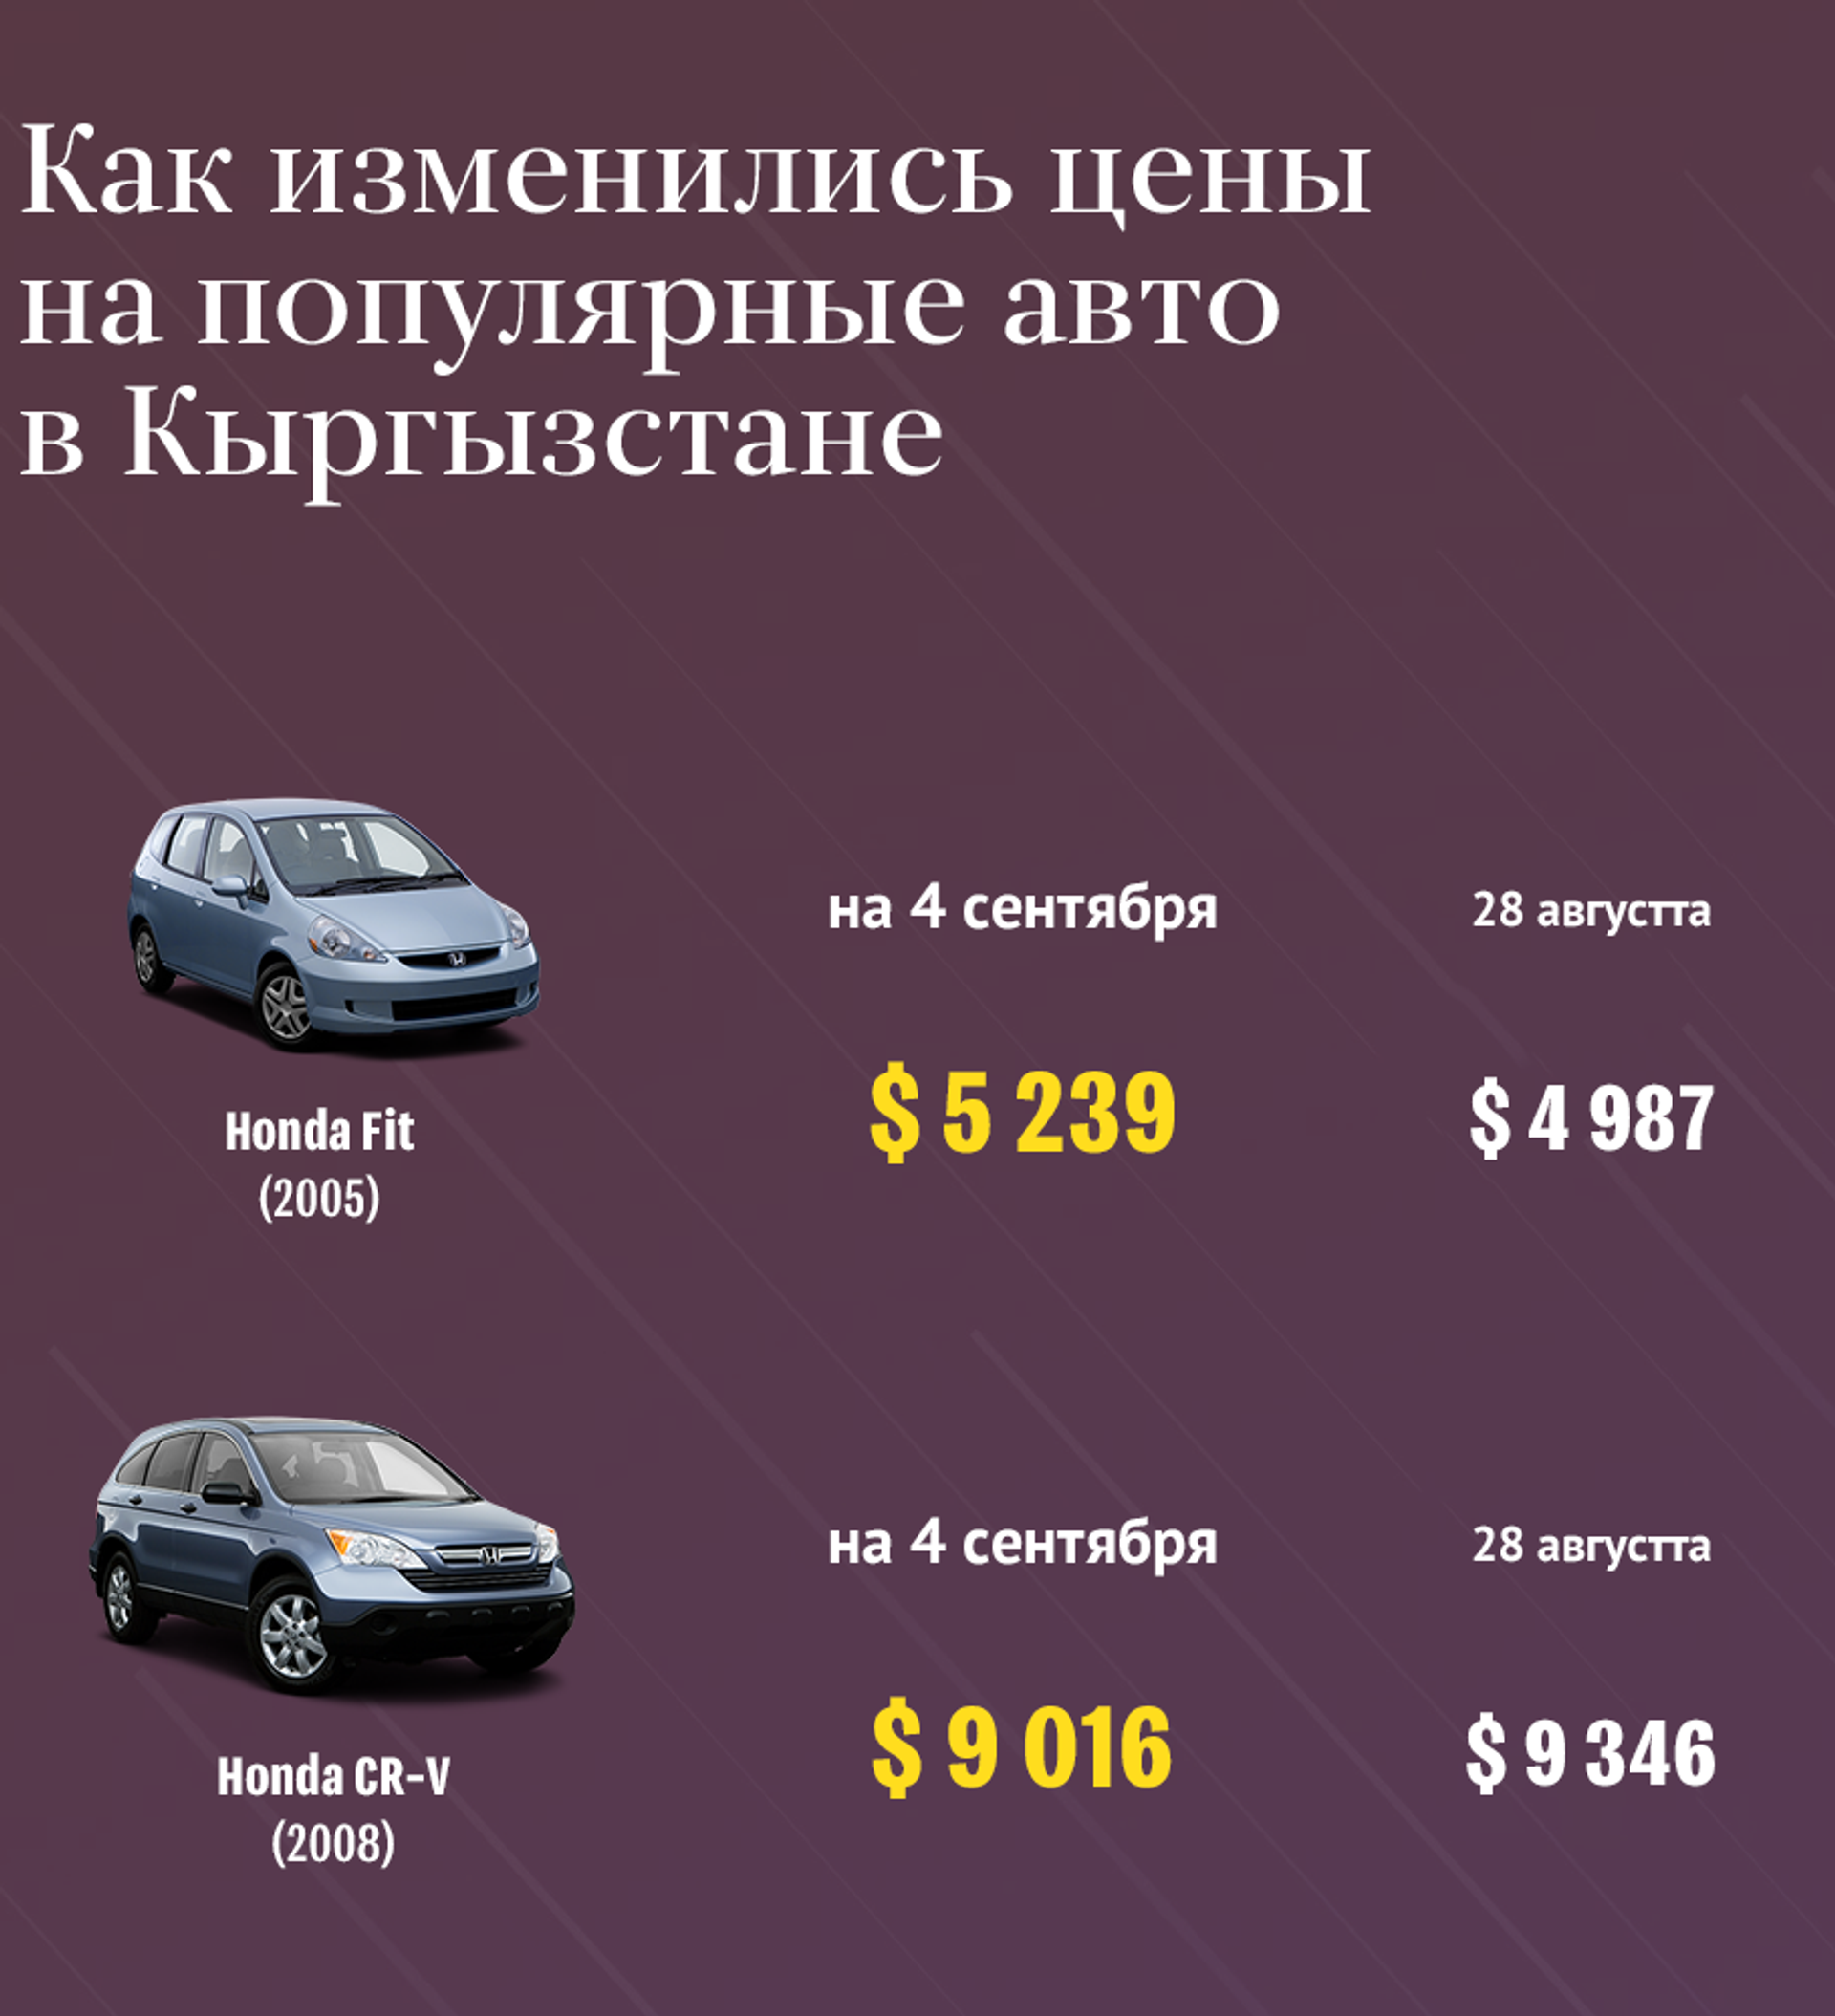 Как менялись цены на автомобили. Самая распространенная машина в Кыргызстане. Какая машина самая популярная в Кыргызстане. Обзор авторынка Бишкека.